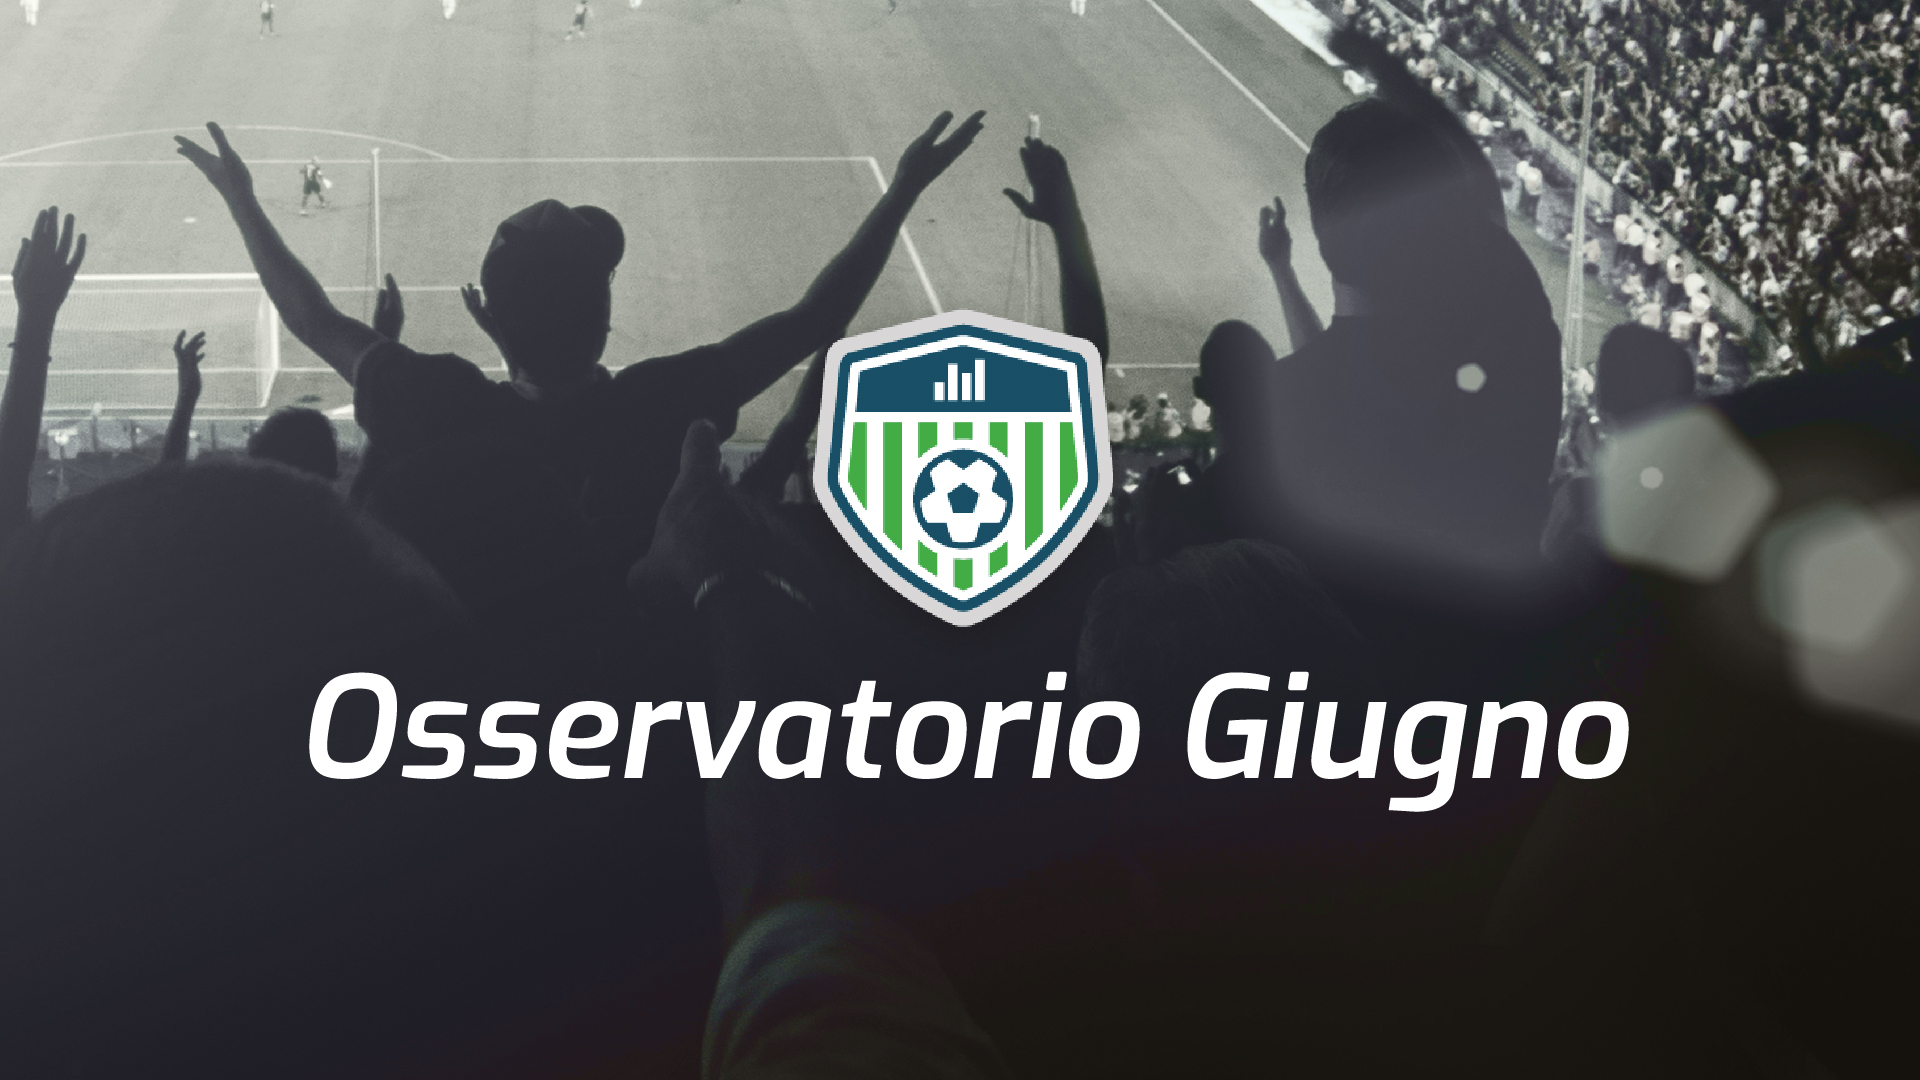 Osservatorio Giugno Social Media Soccer